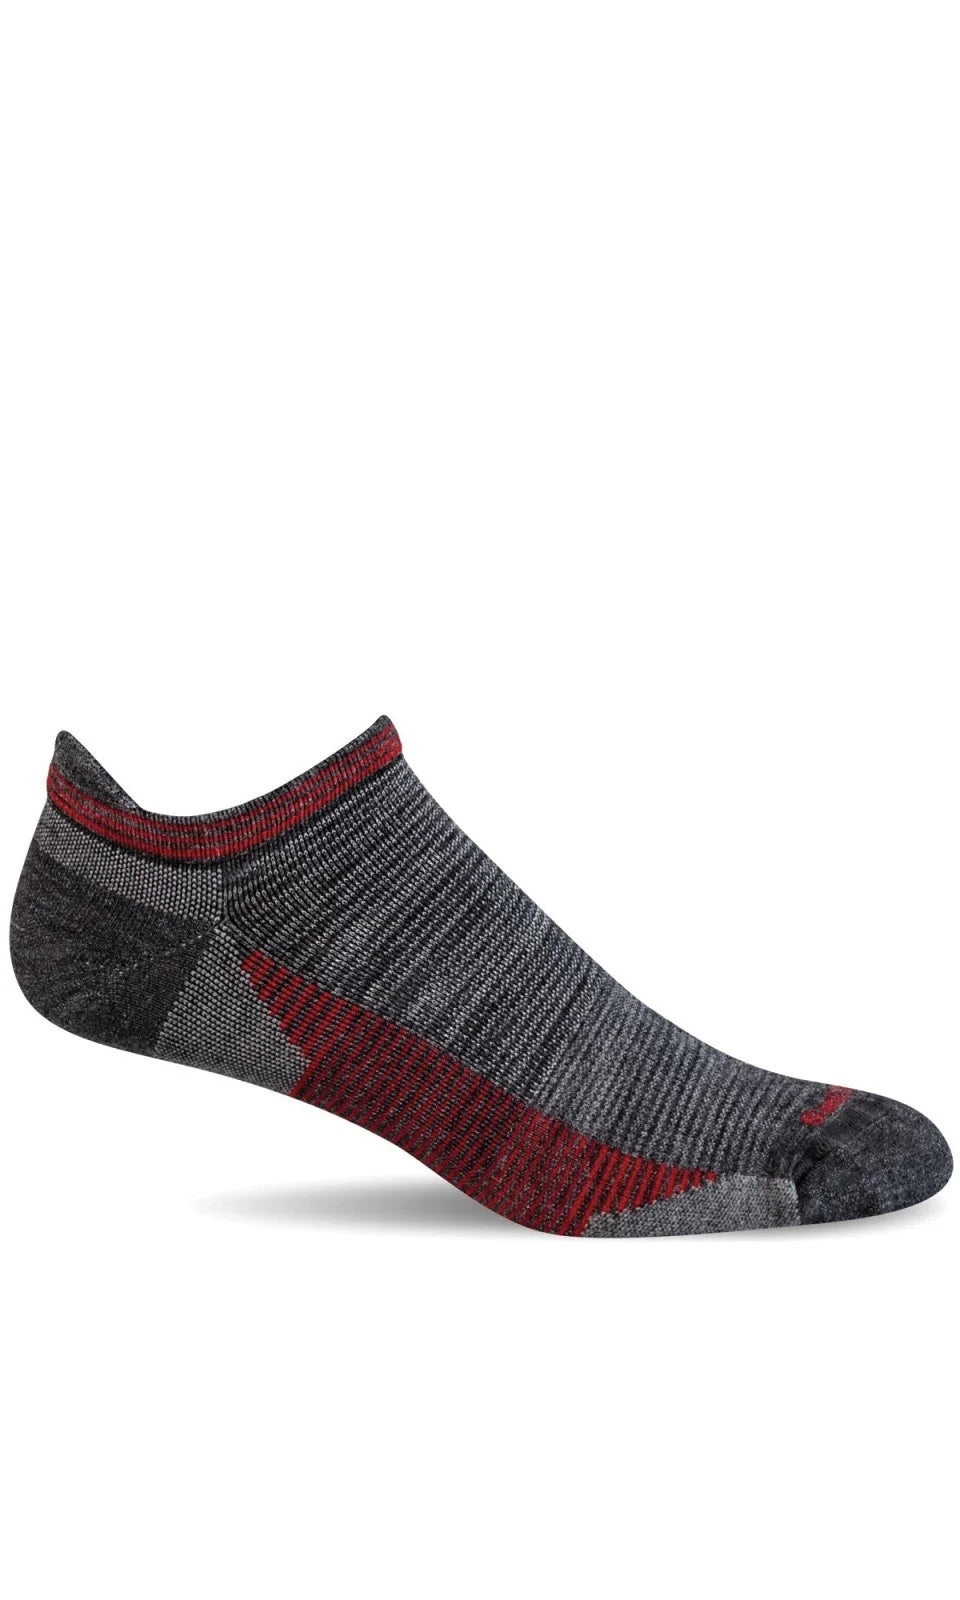 Men's Cadence | Moderate Compression Socks 